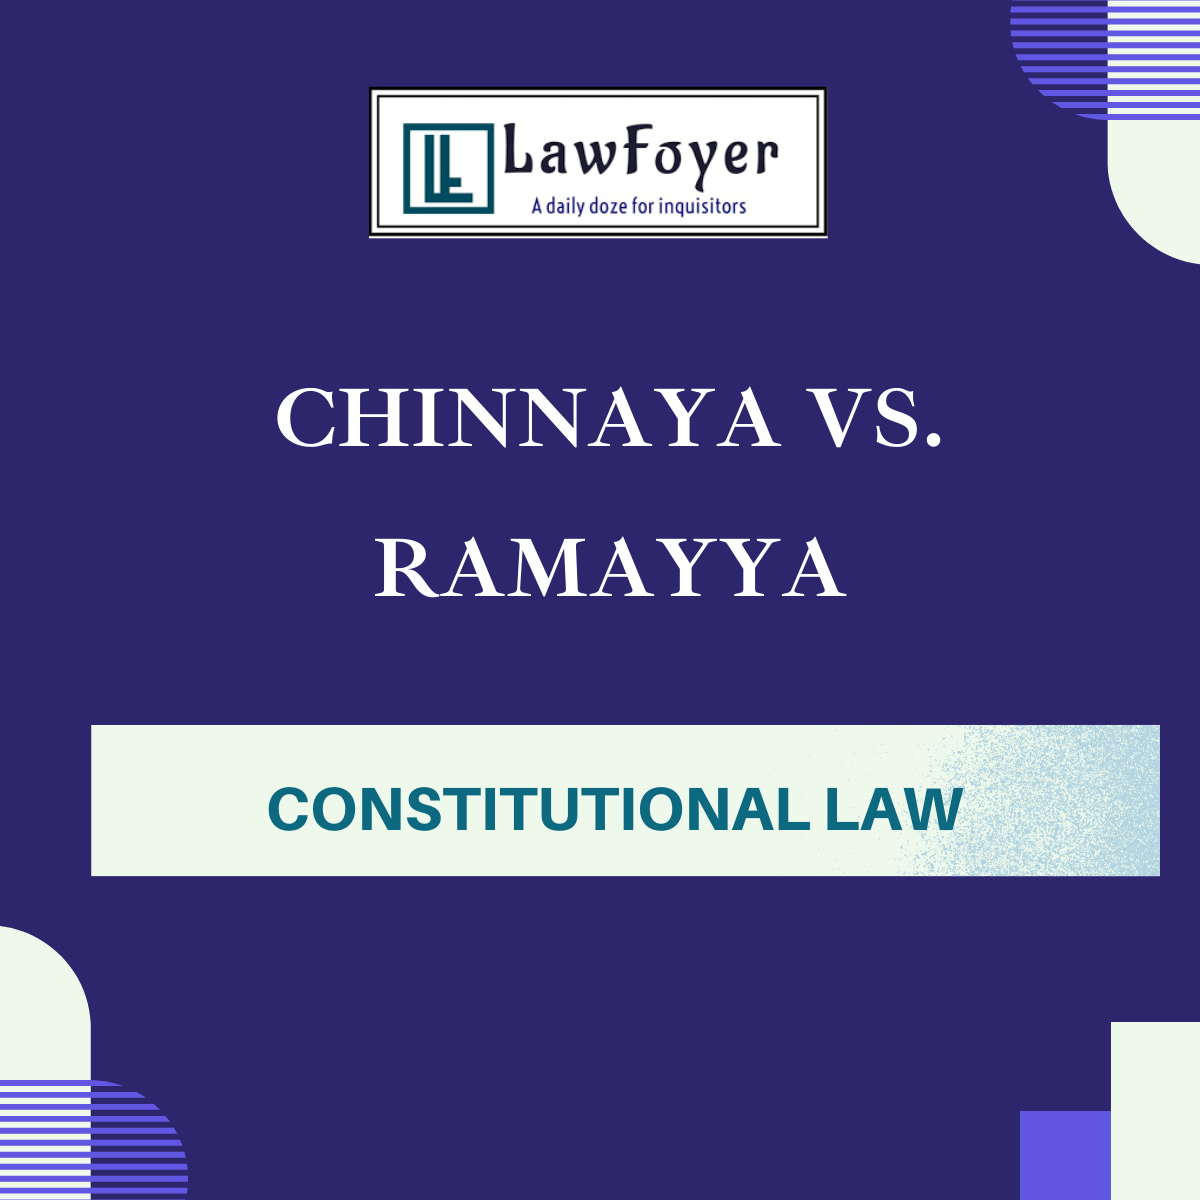 Chinnaya vs. Ramayya